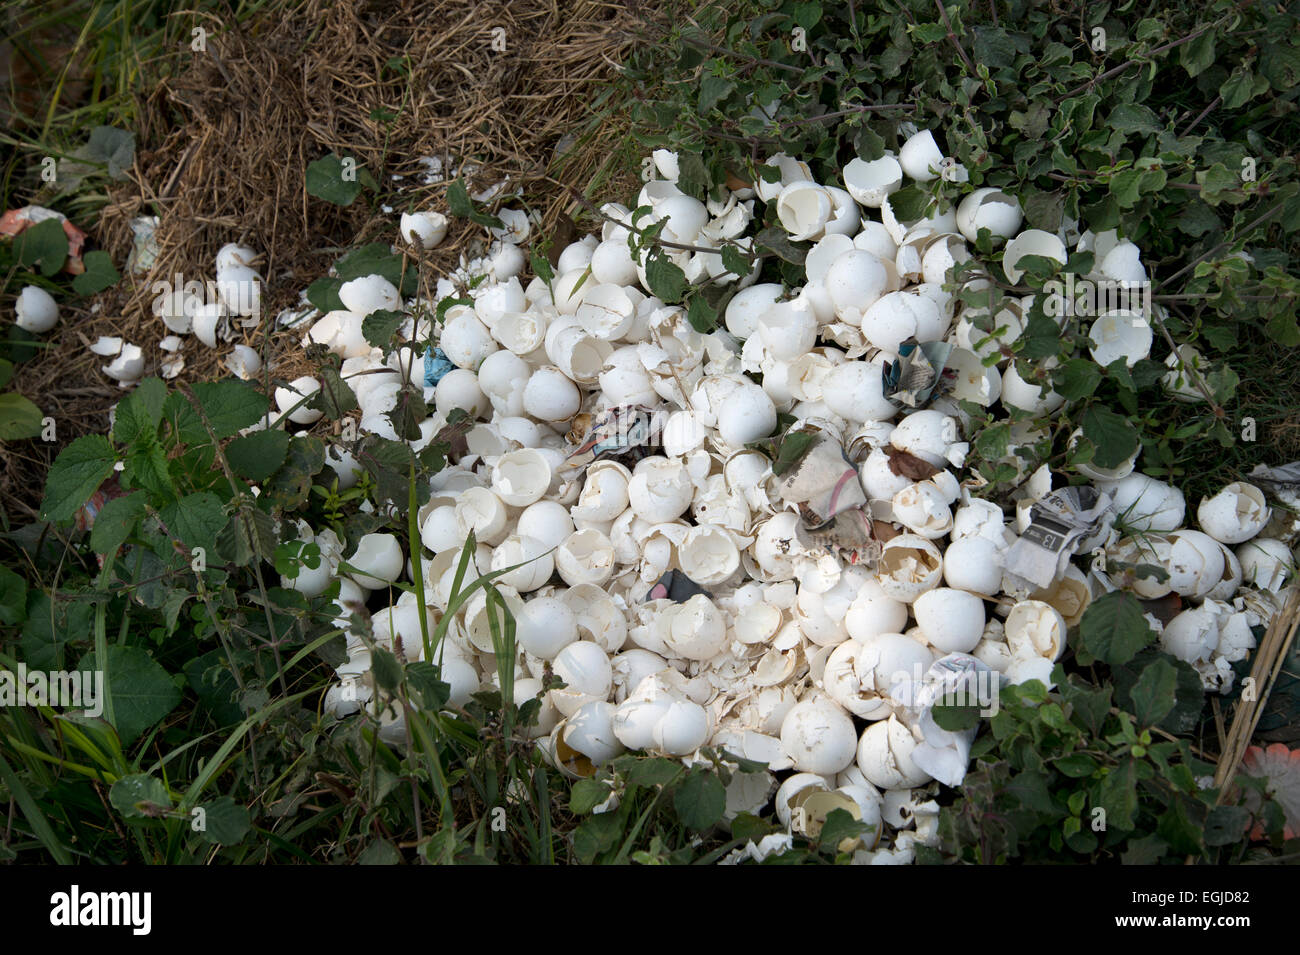 Bihar. India. Mastichak village. Pile of eggshells. Stock Photo